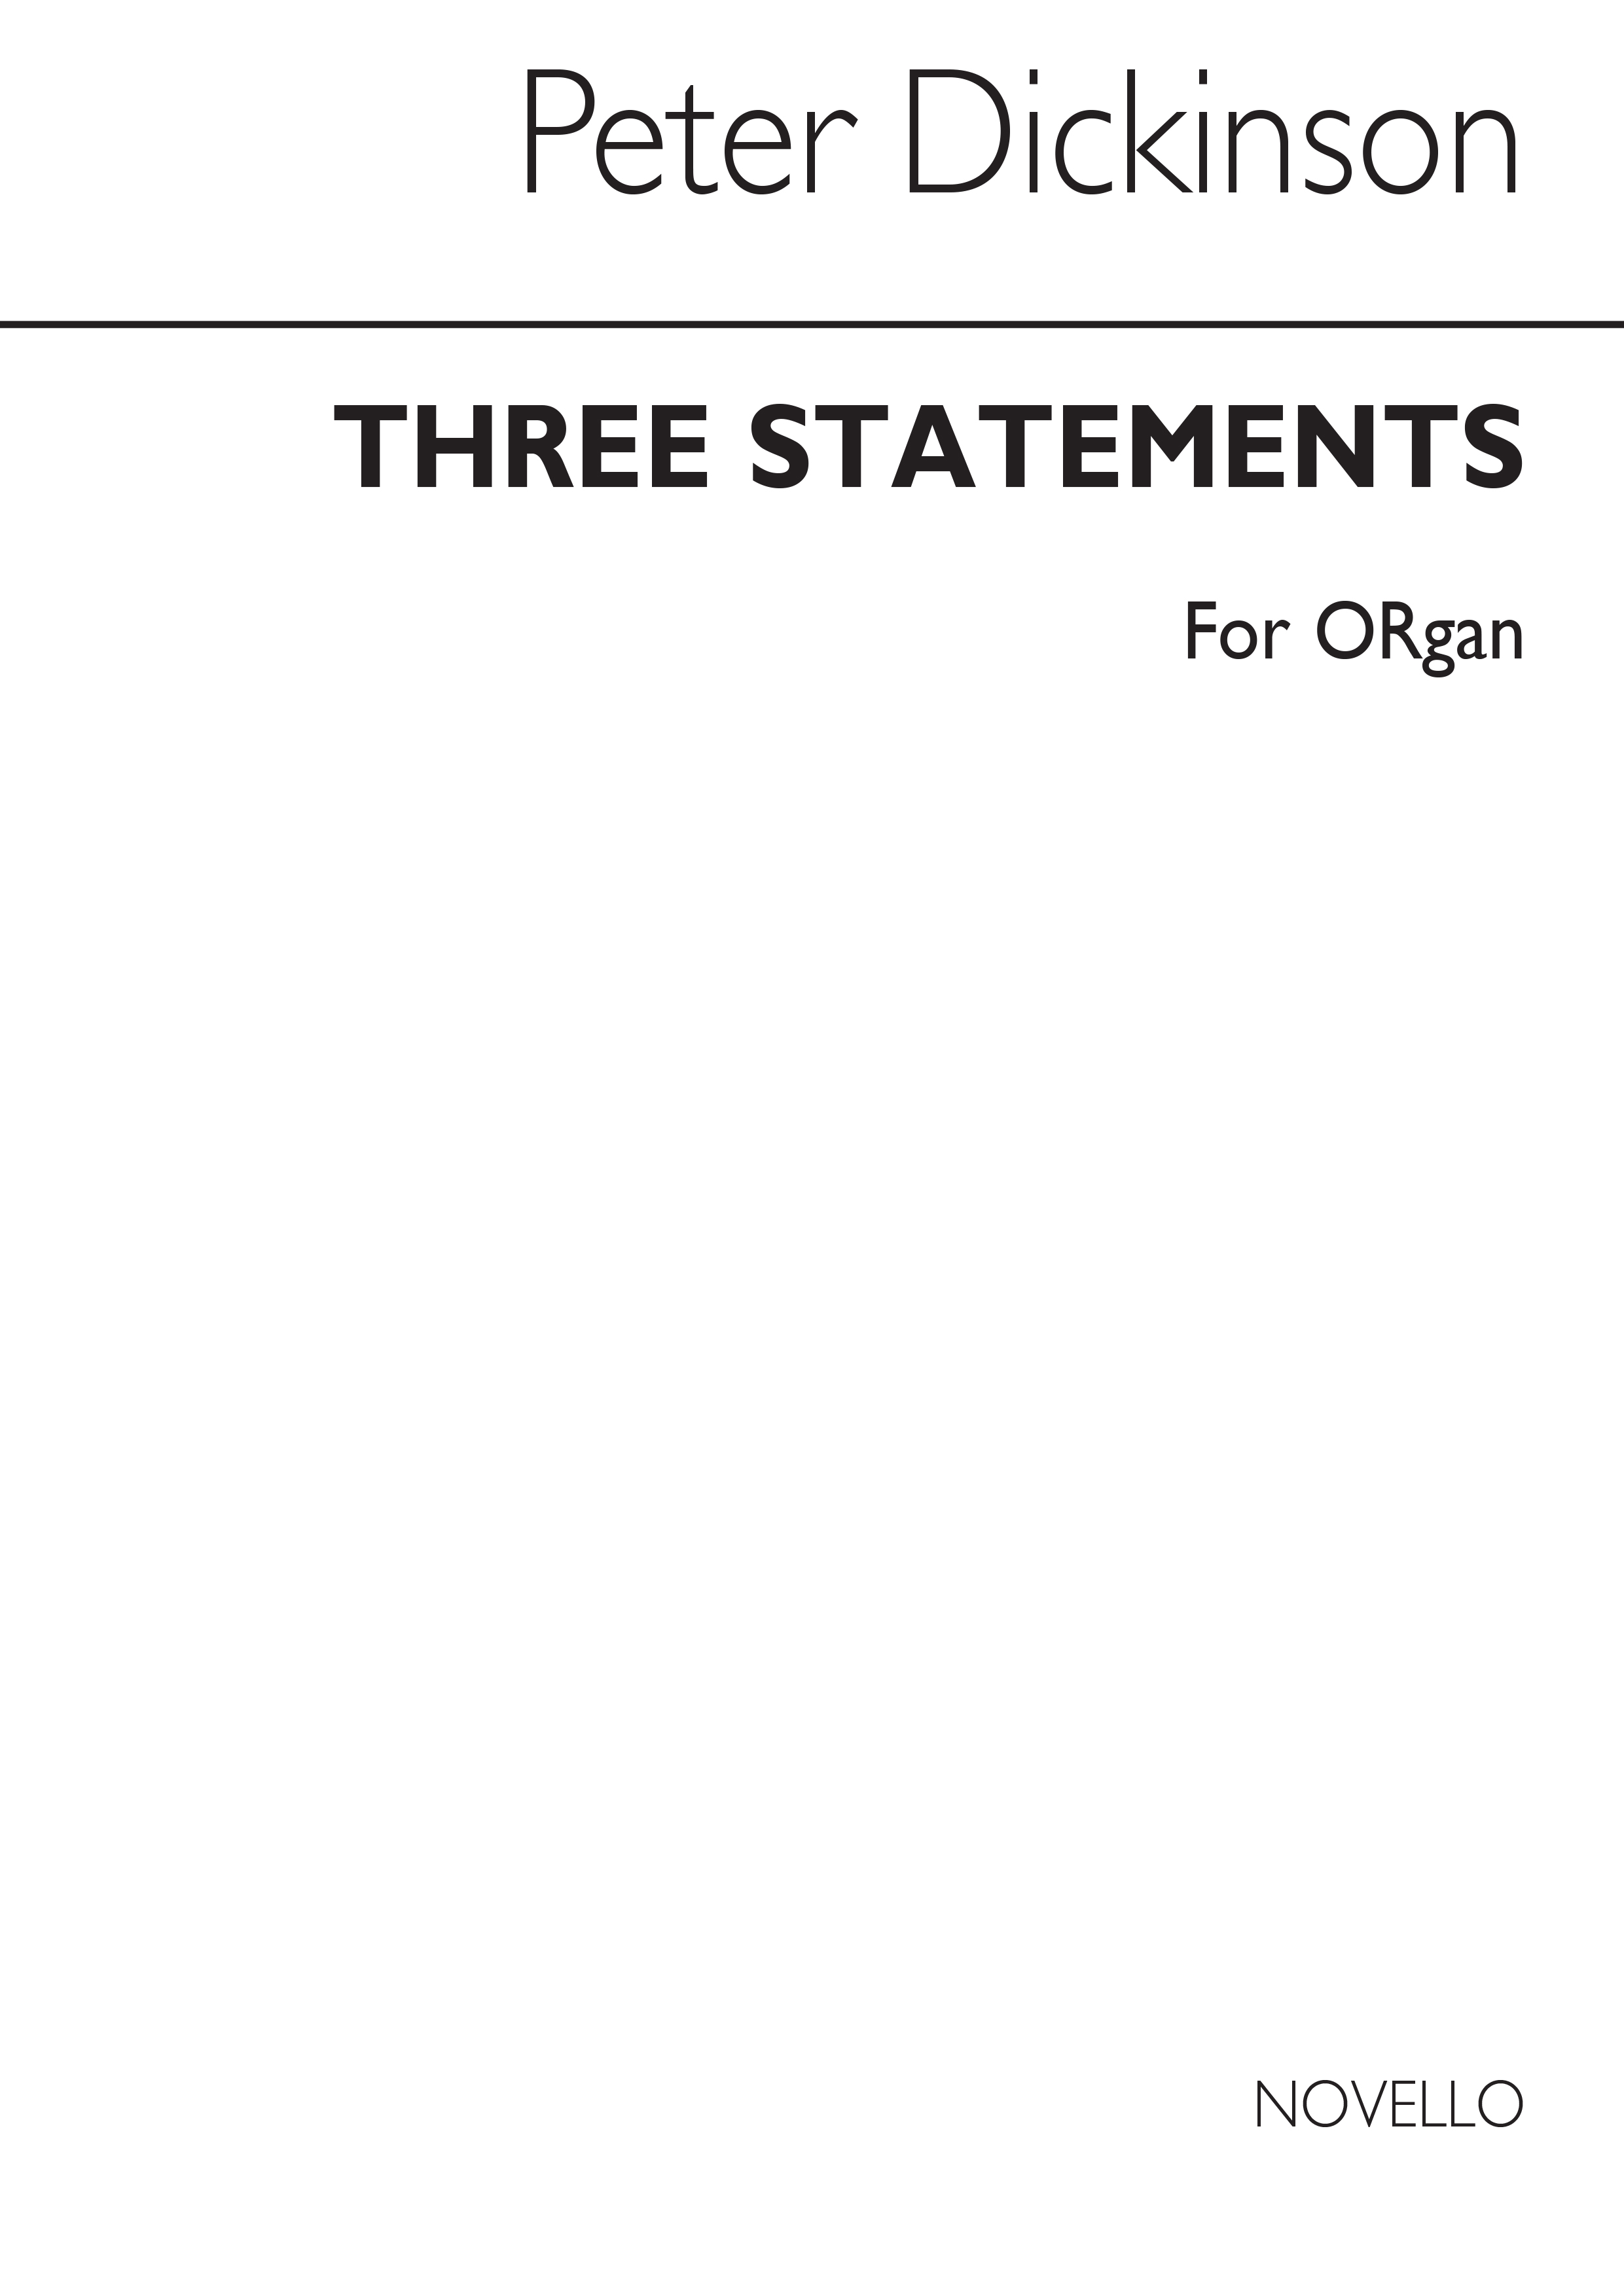 Dickinson: Three Statements for Organ